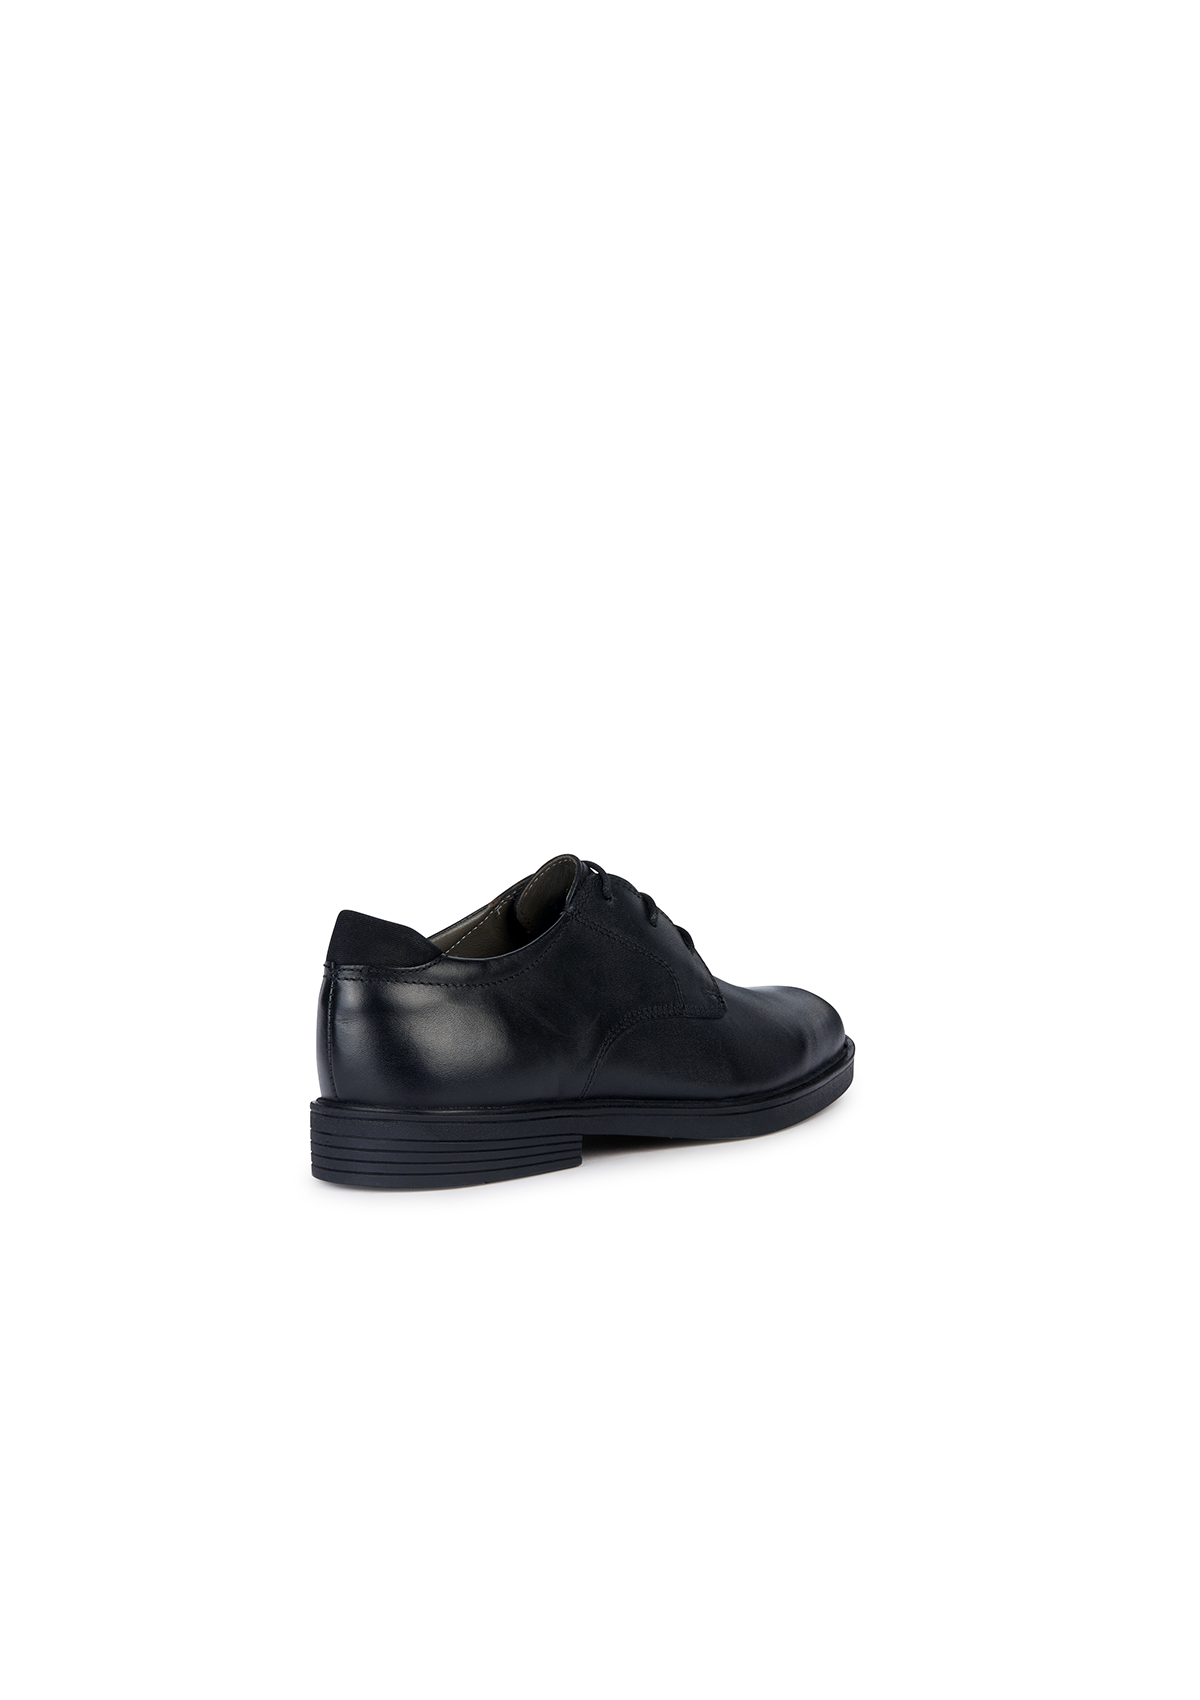 Geox Boys School Shoes ZHEENO Laced Black